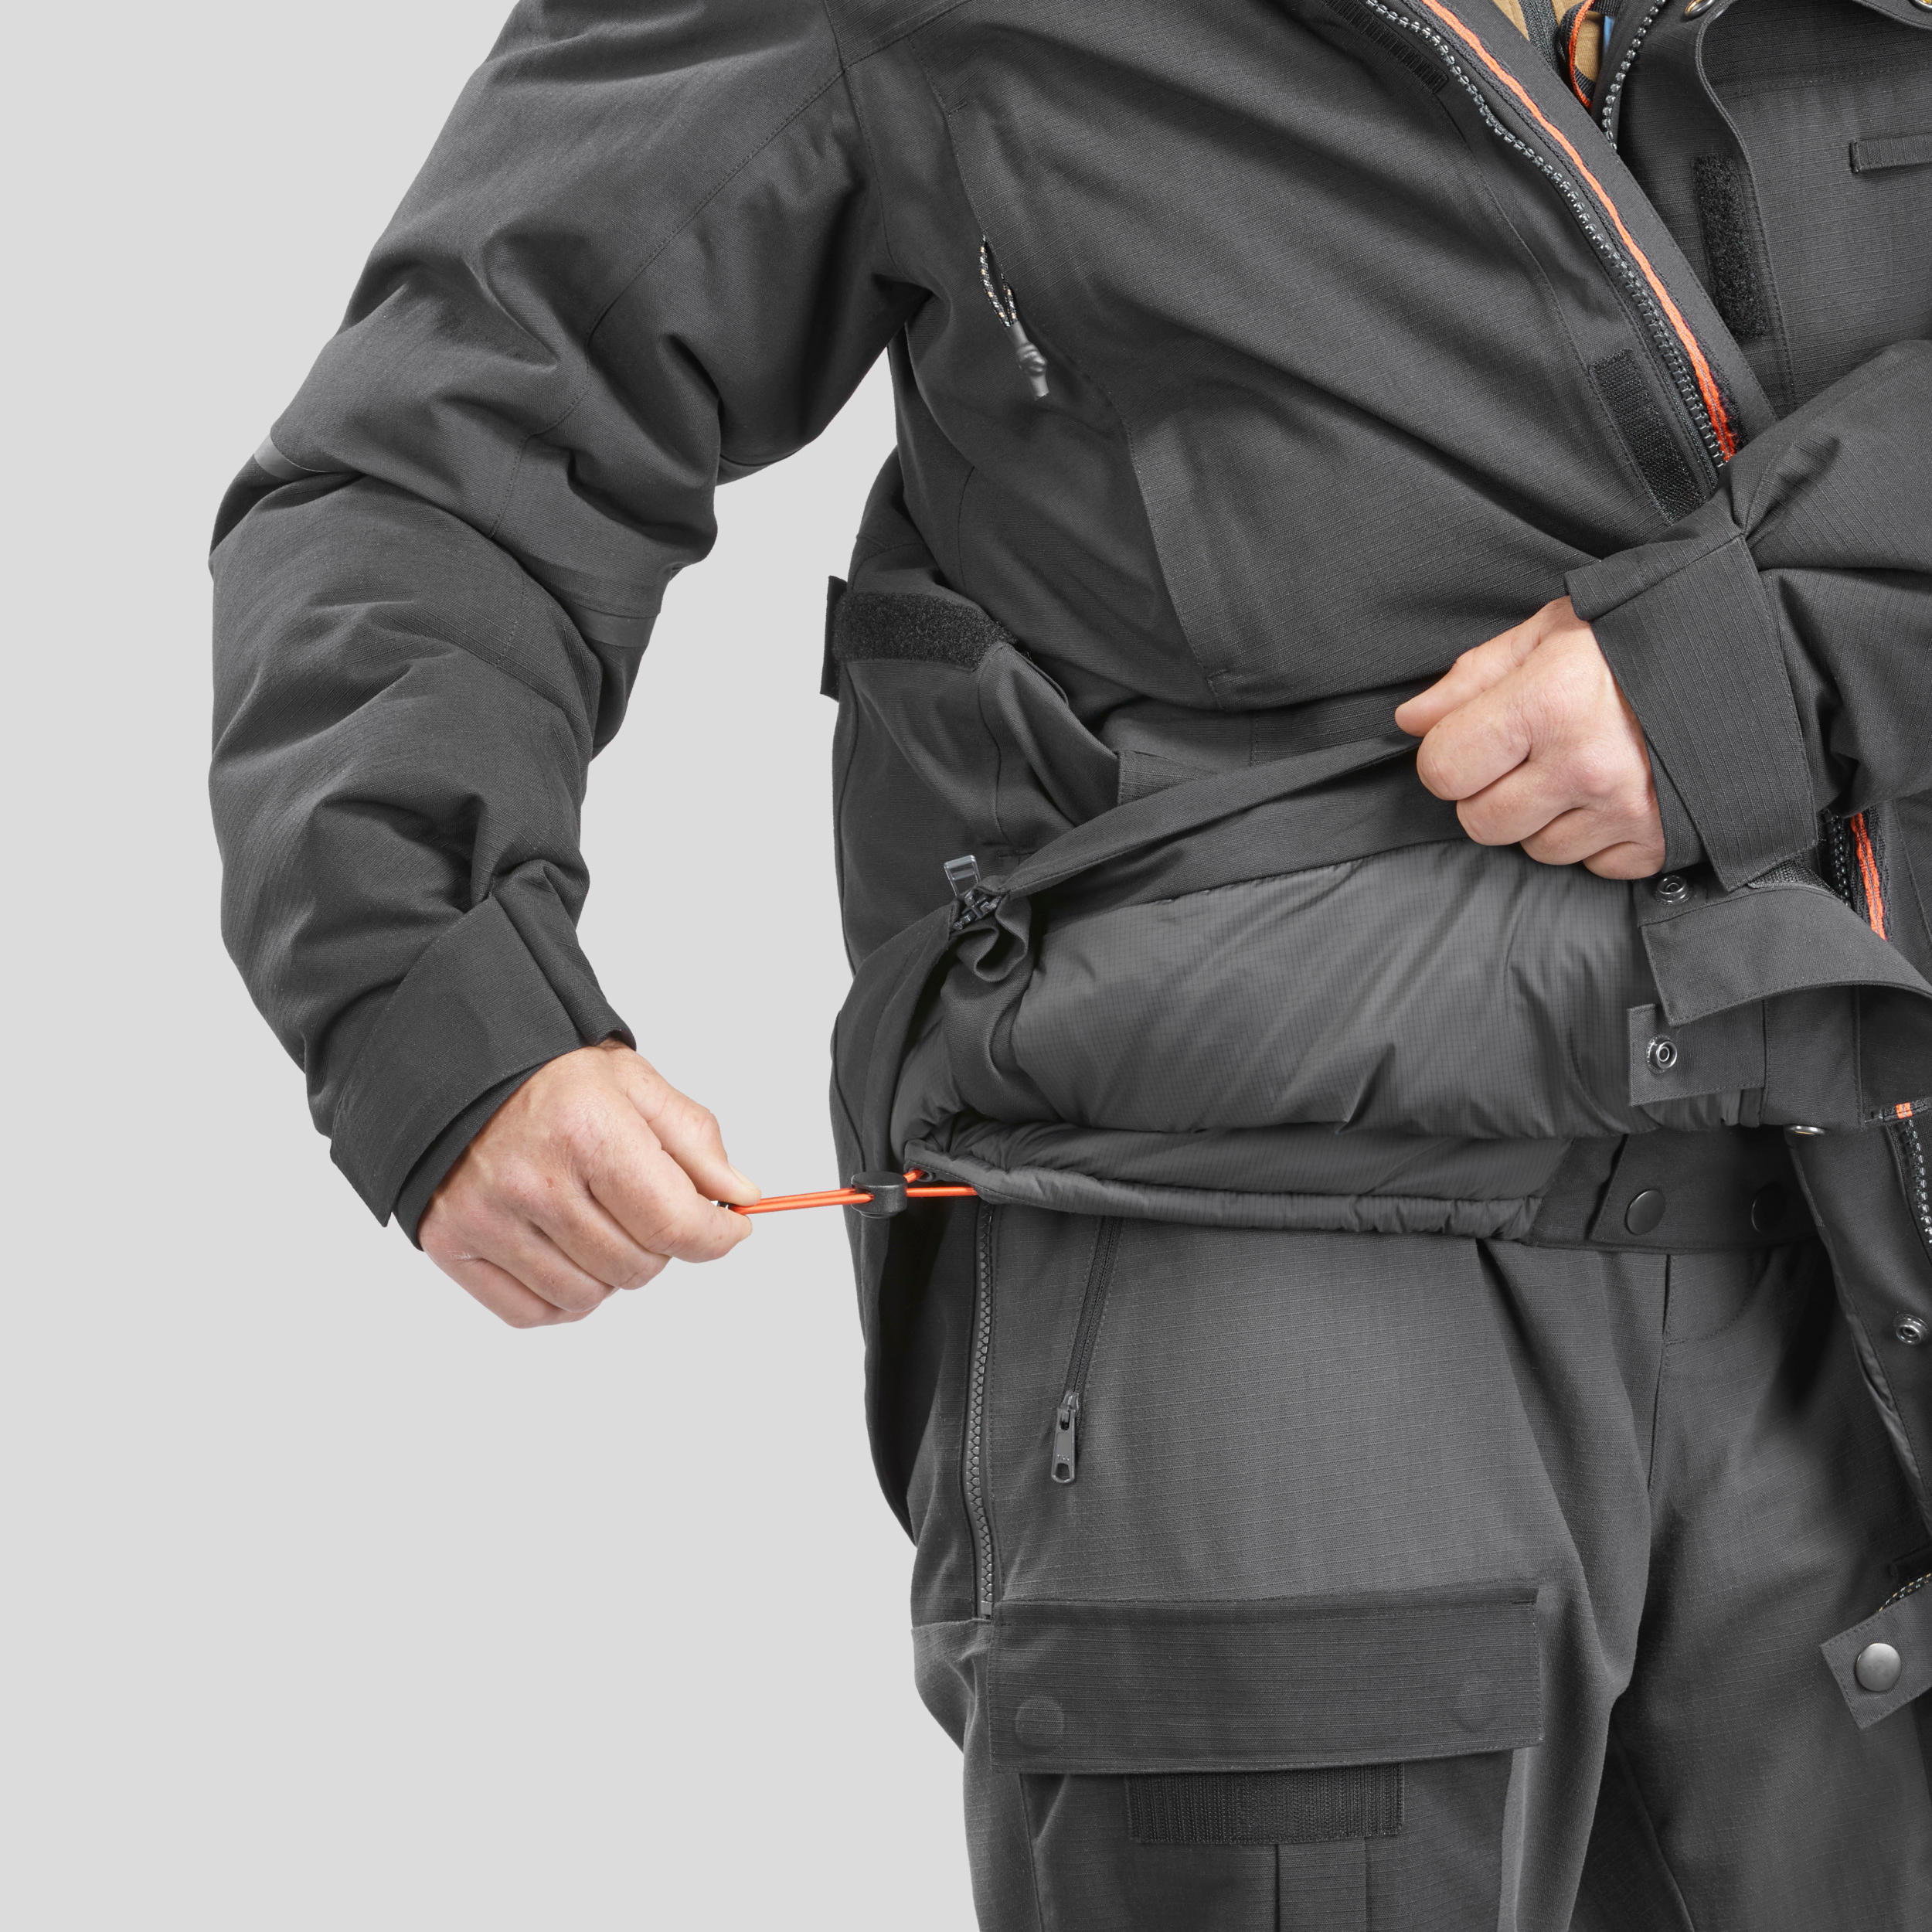 Unisex waterproof parka jacket - 900 - Black 10/21